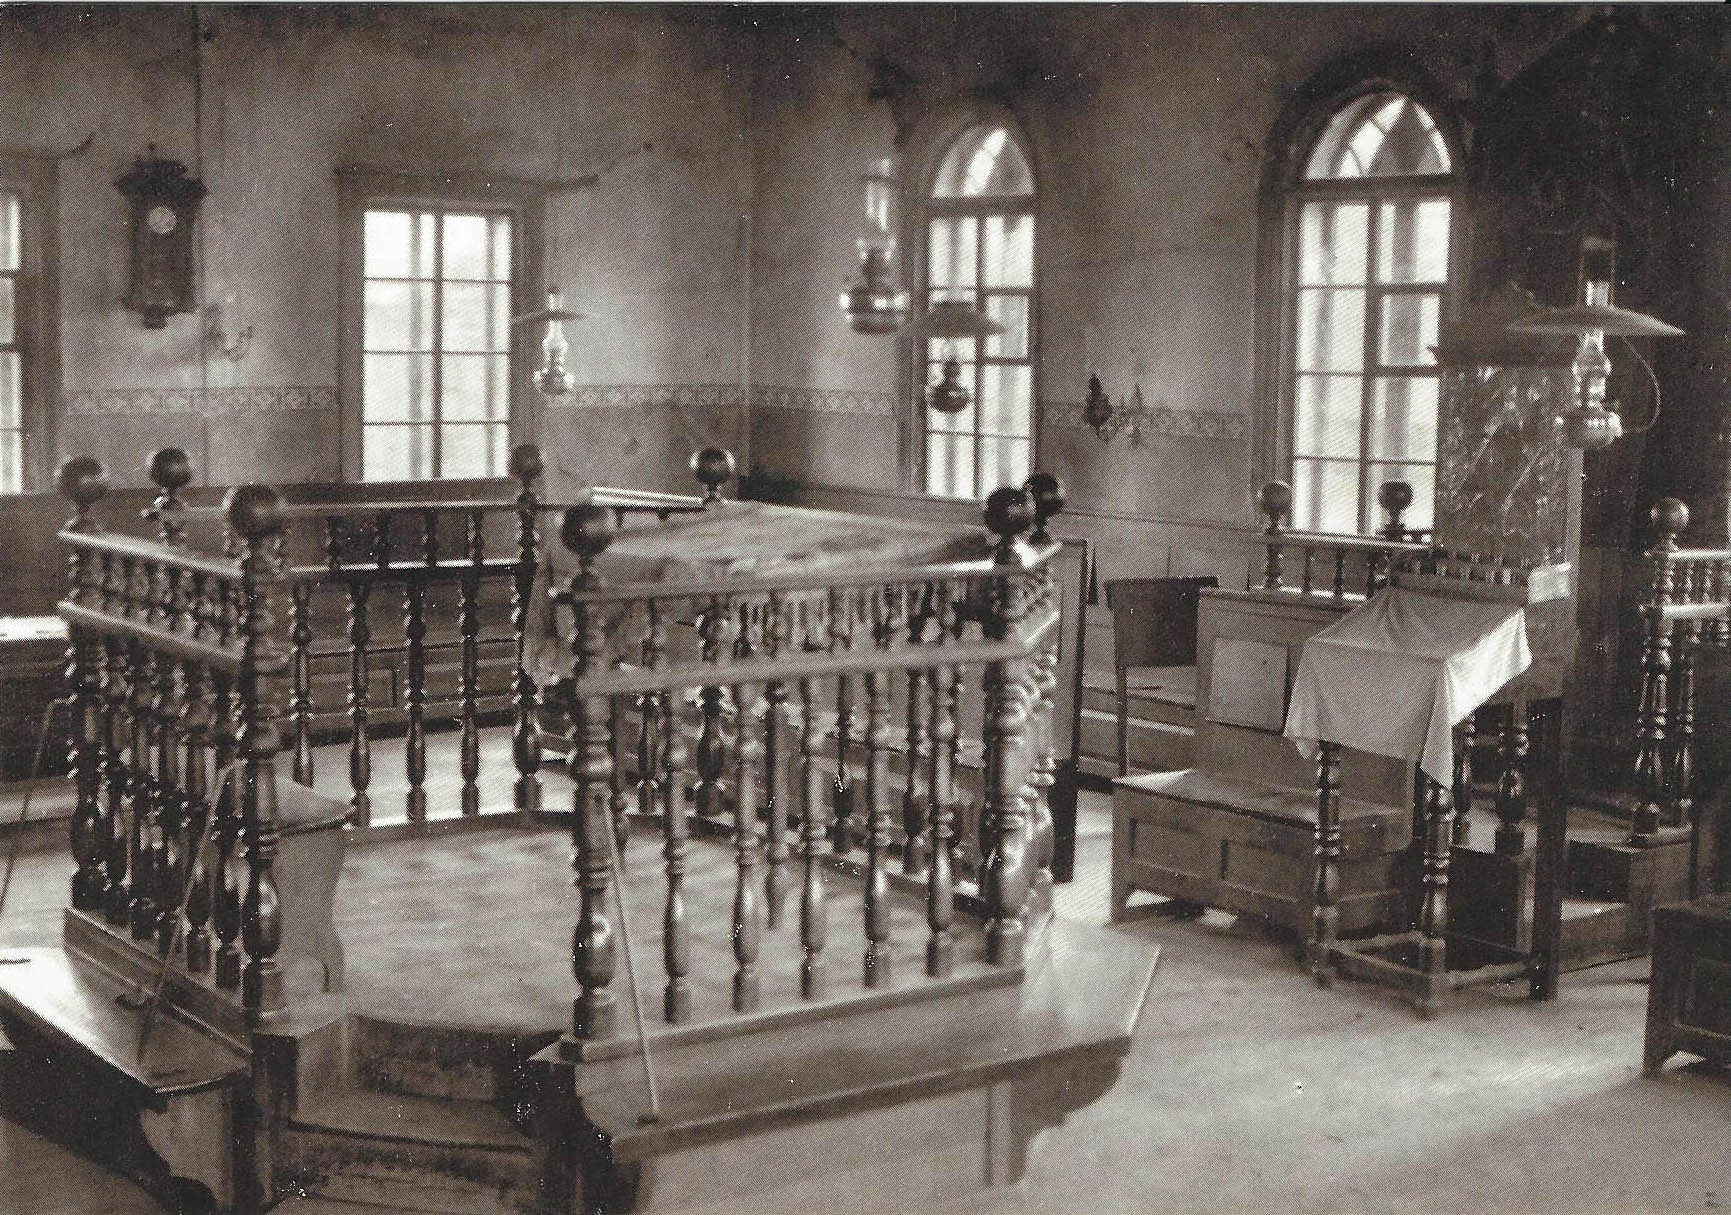 Interior of New House of Prayer